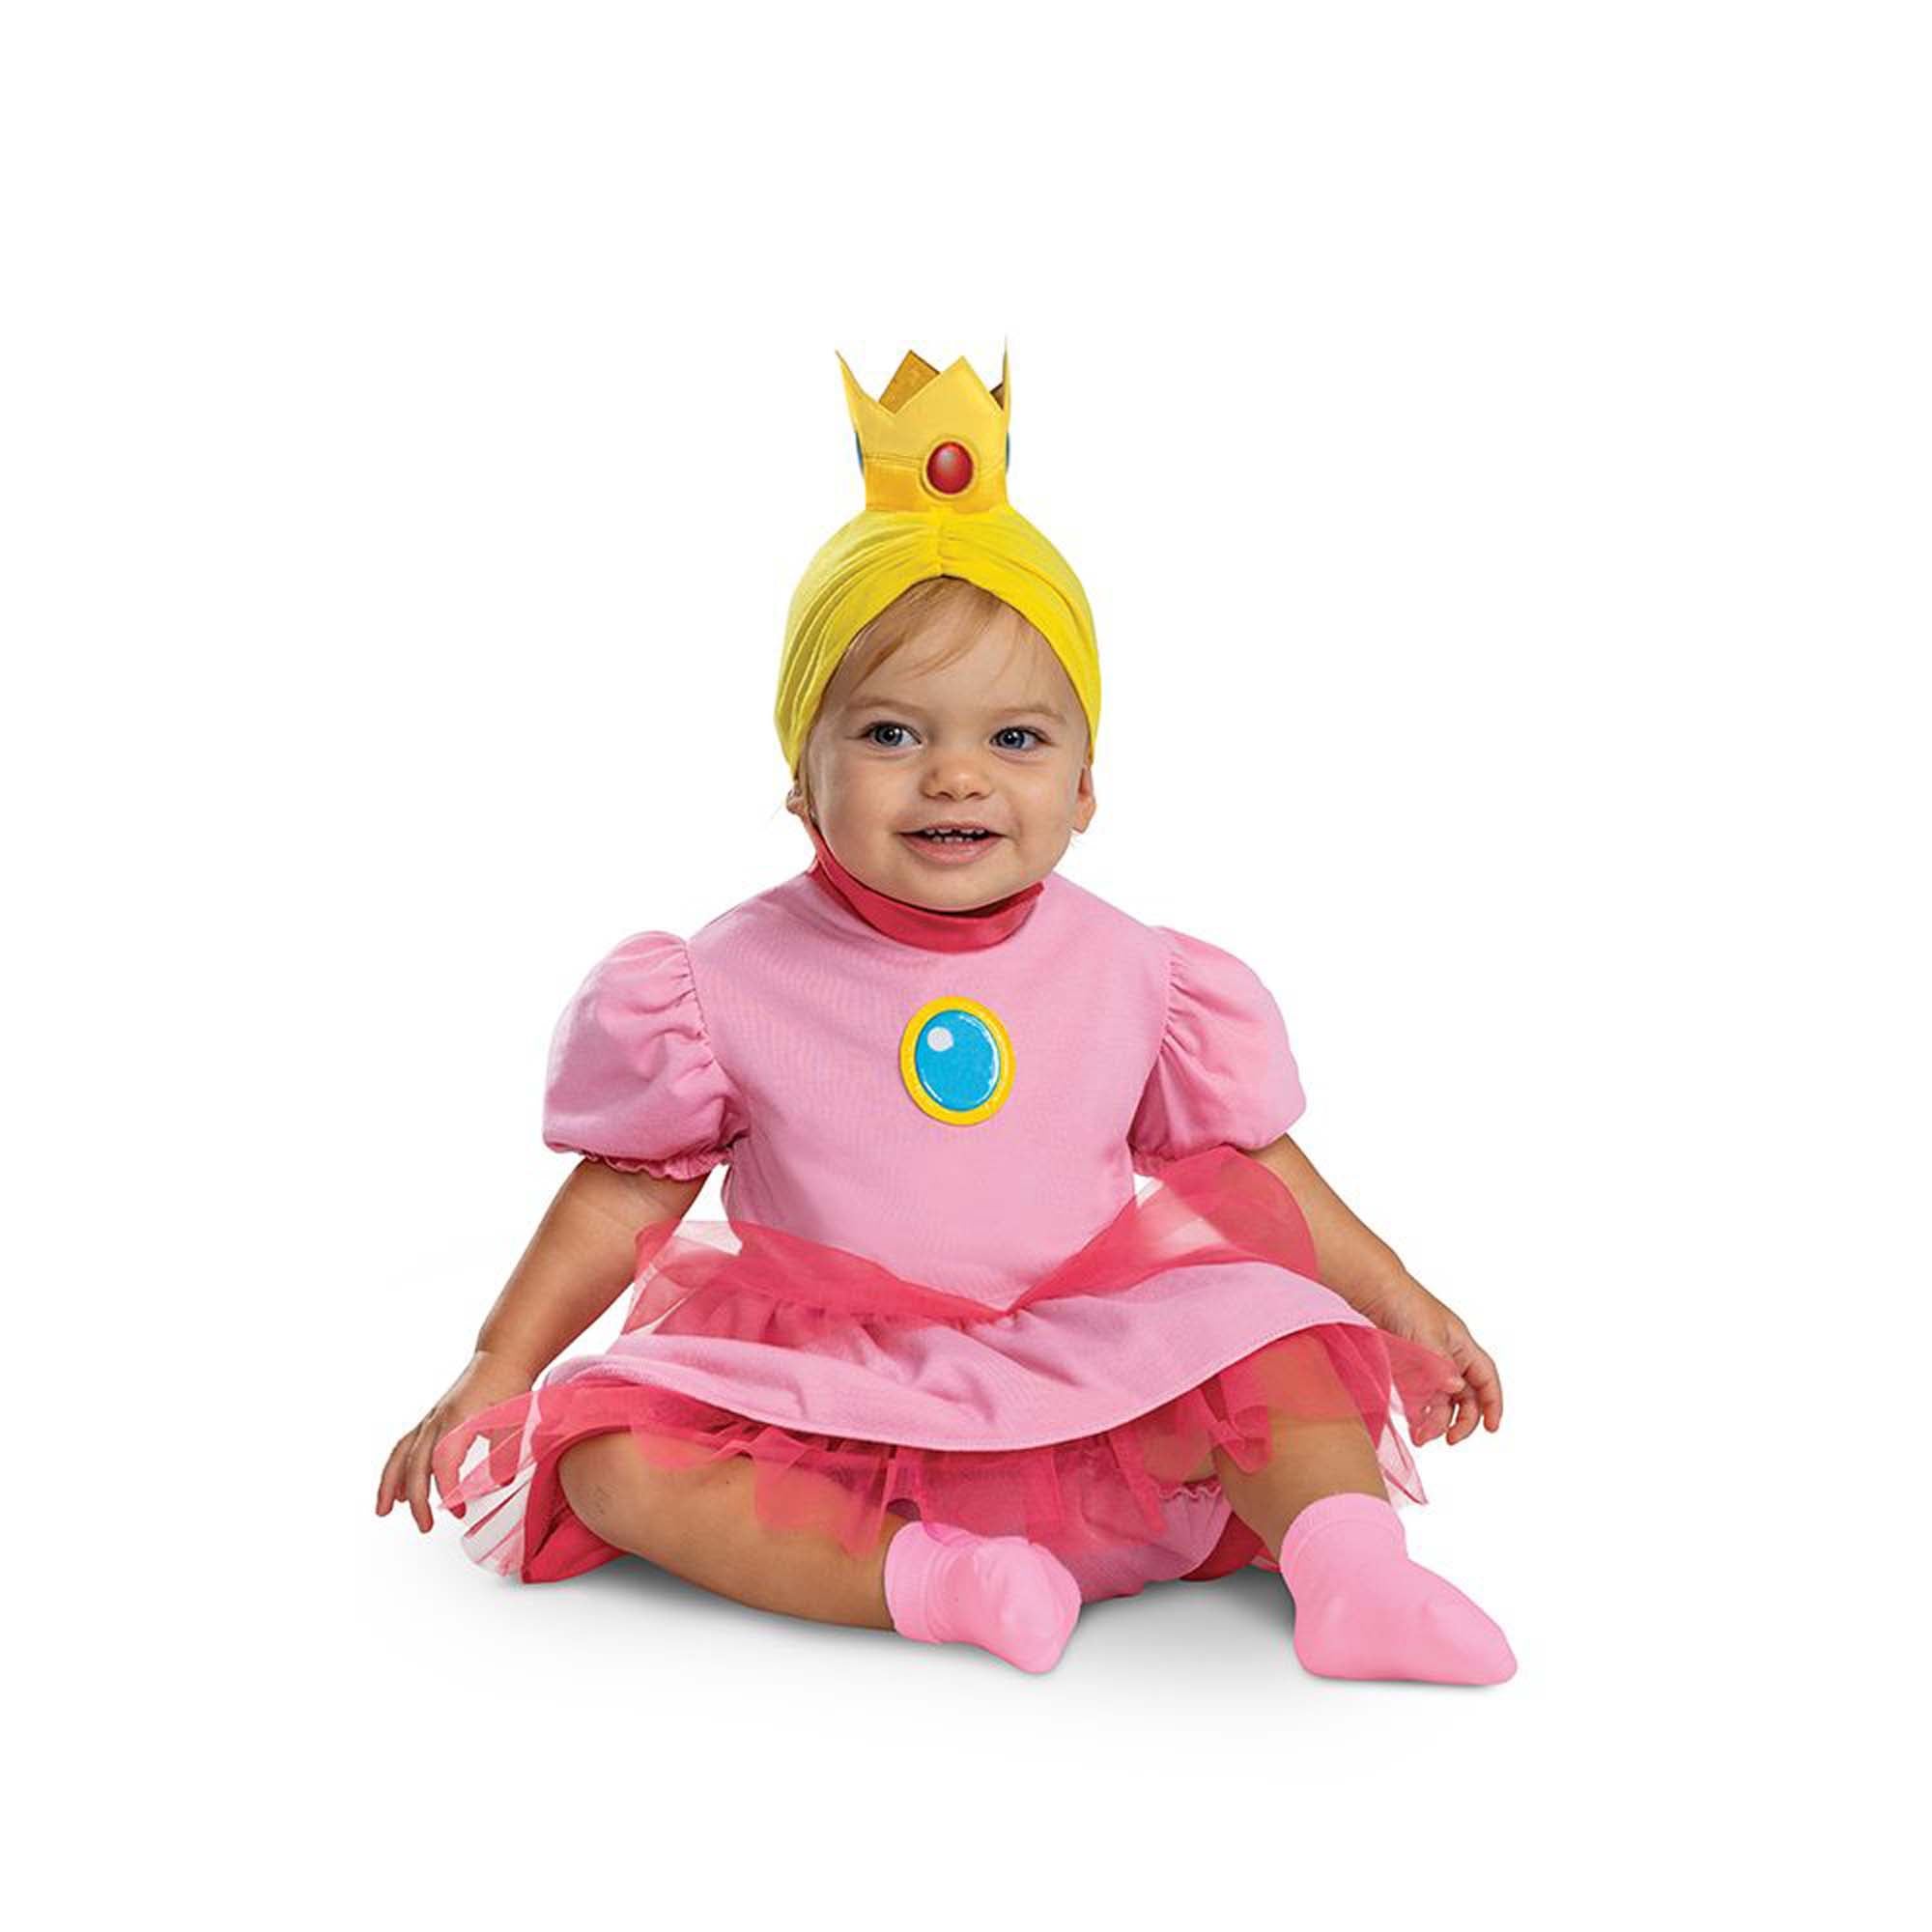 Dreamy 💓  Princess outfits, Pretty pink princess, Princess aesthetic  outfits